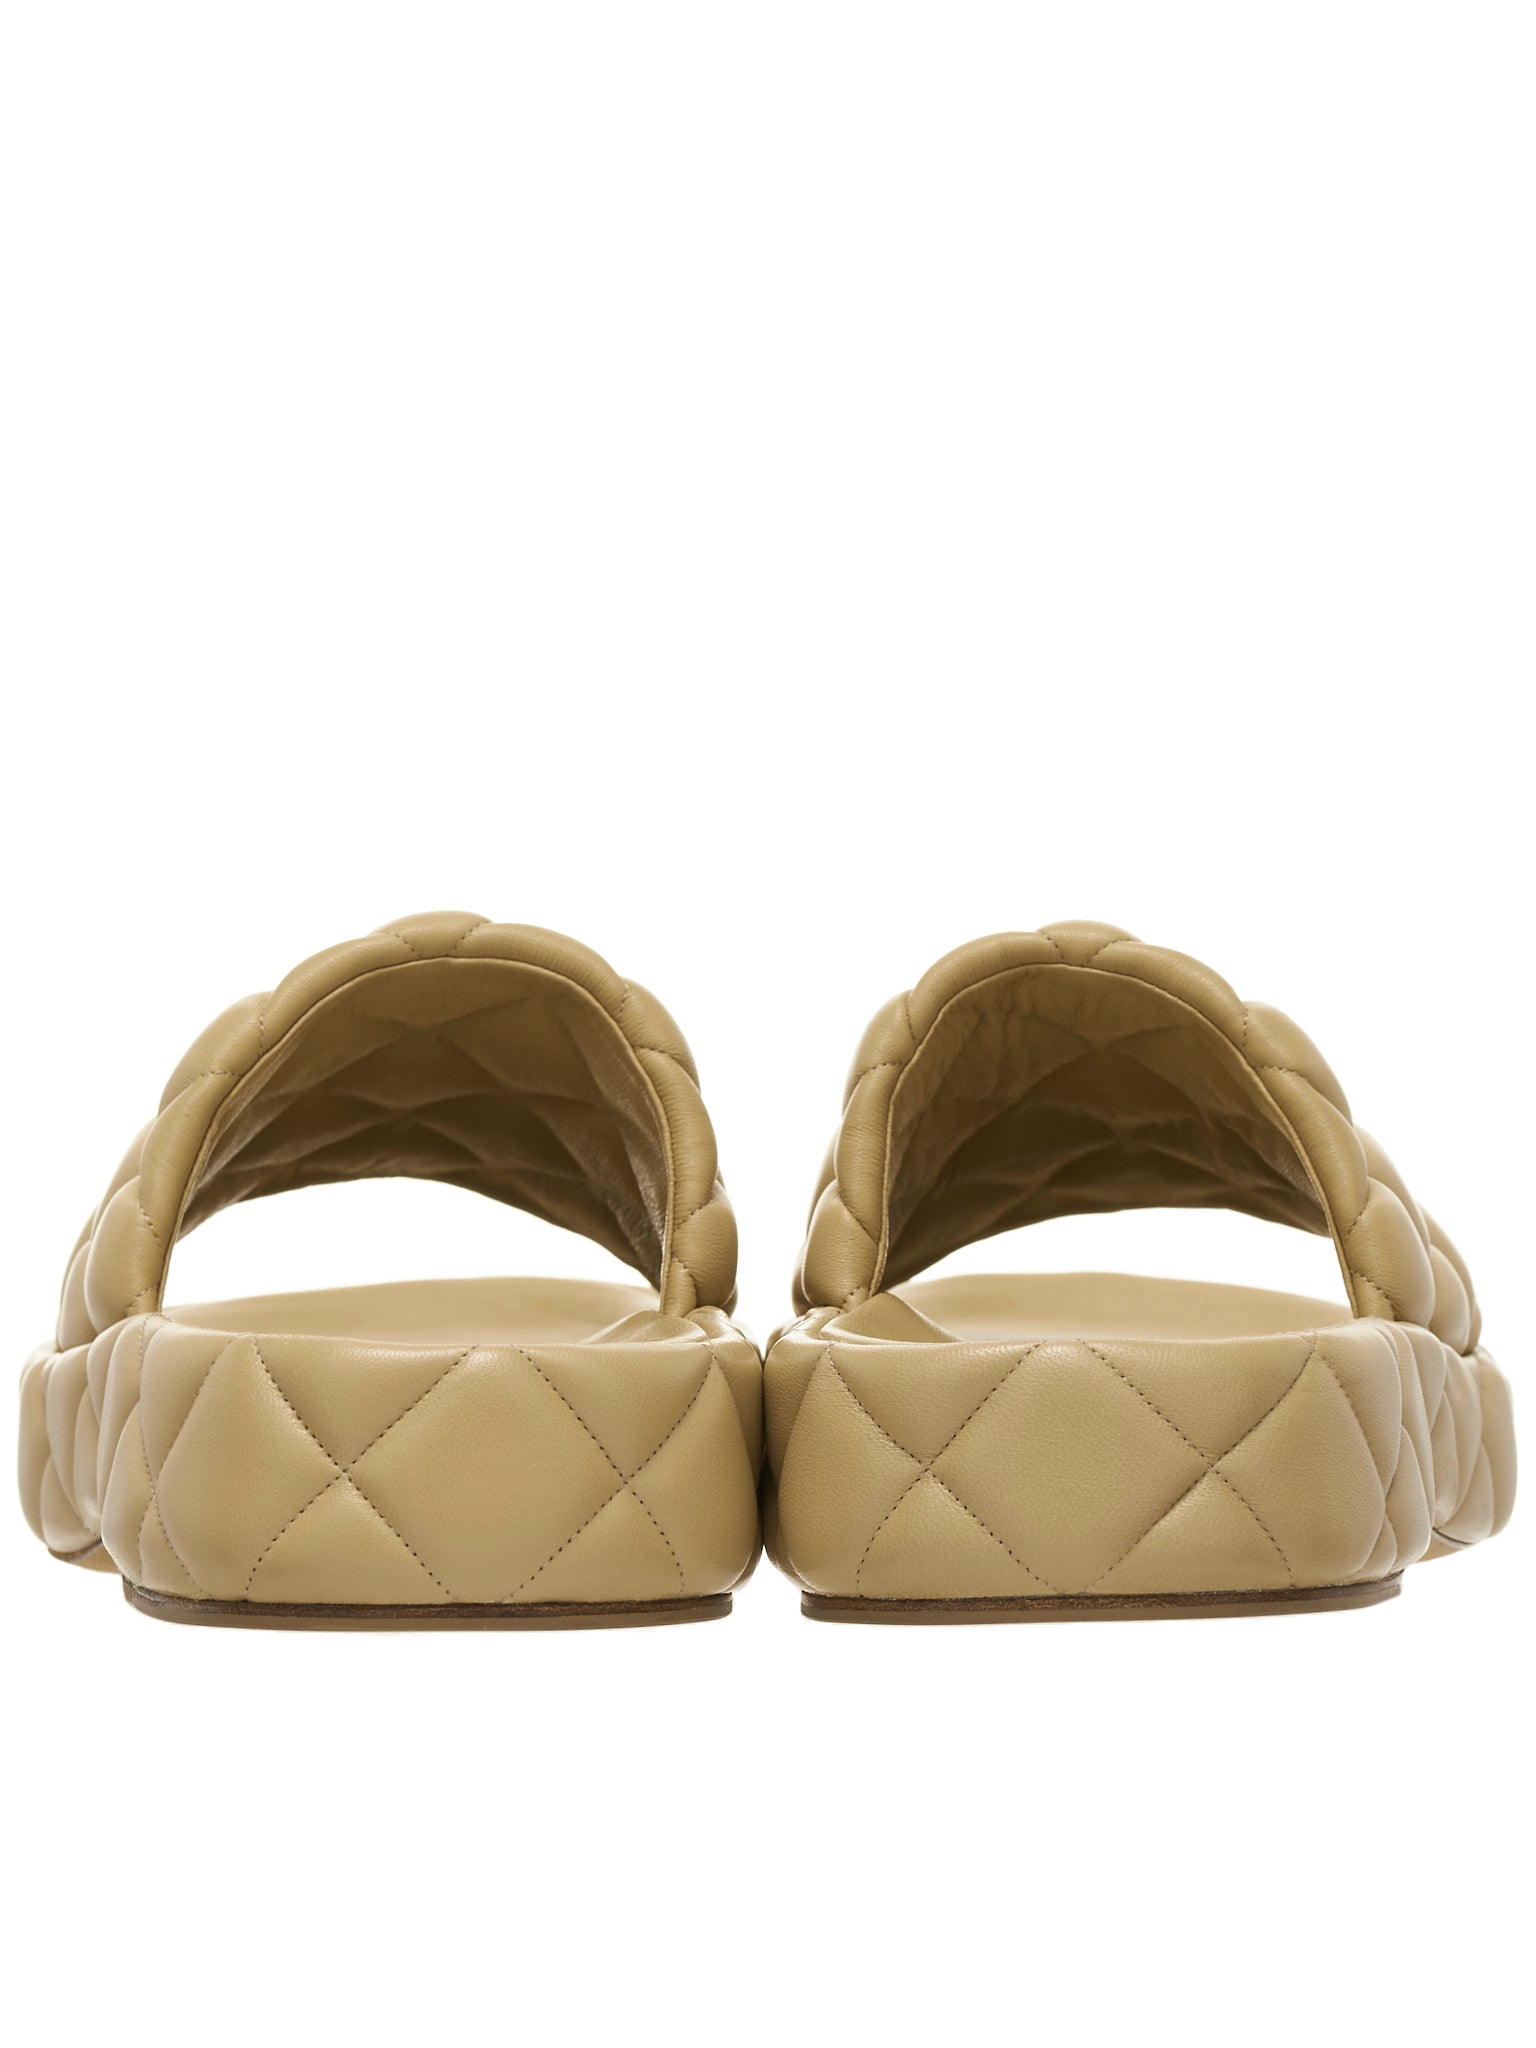 Bottega Veneta Padded Sandals | H. Lorenzo - back